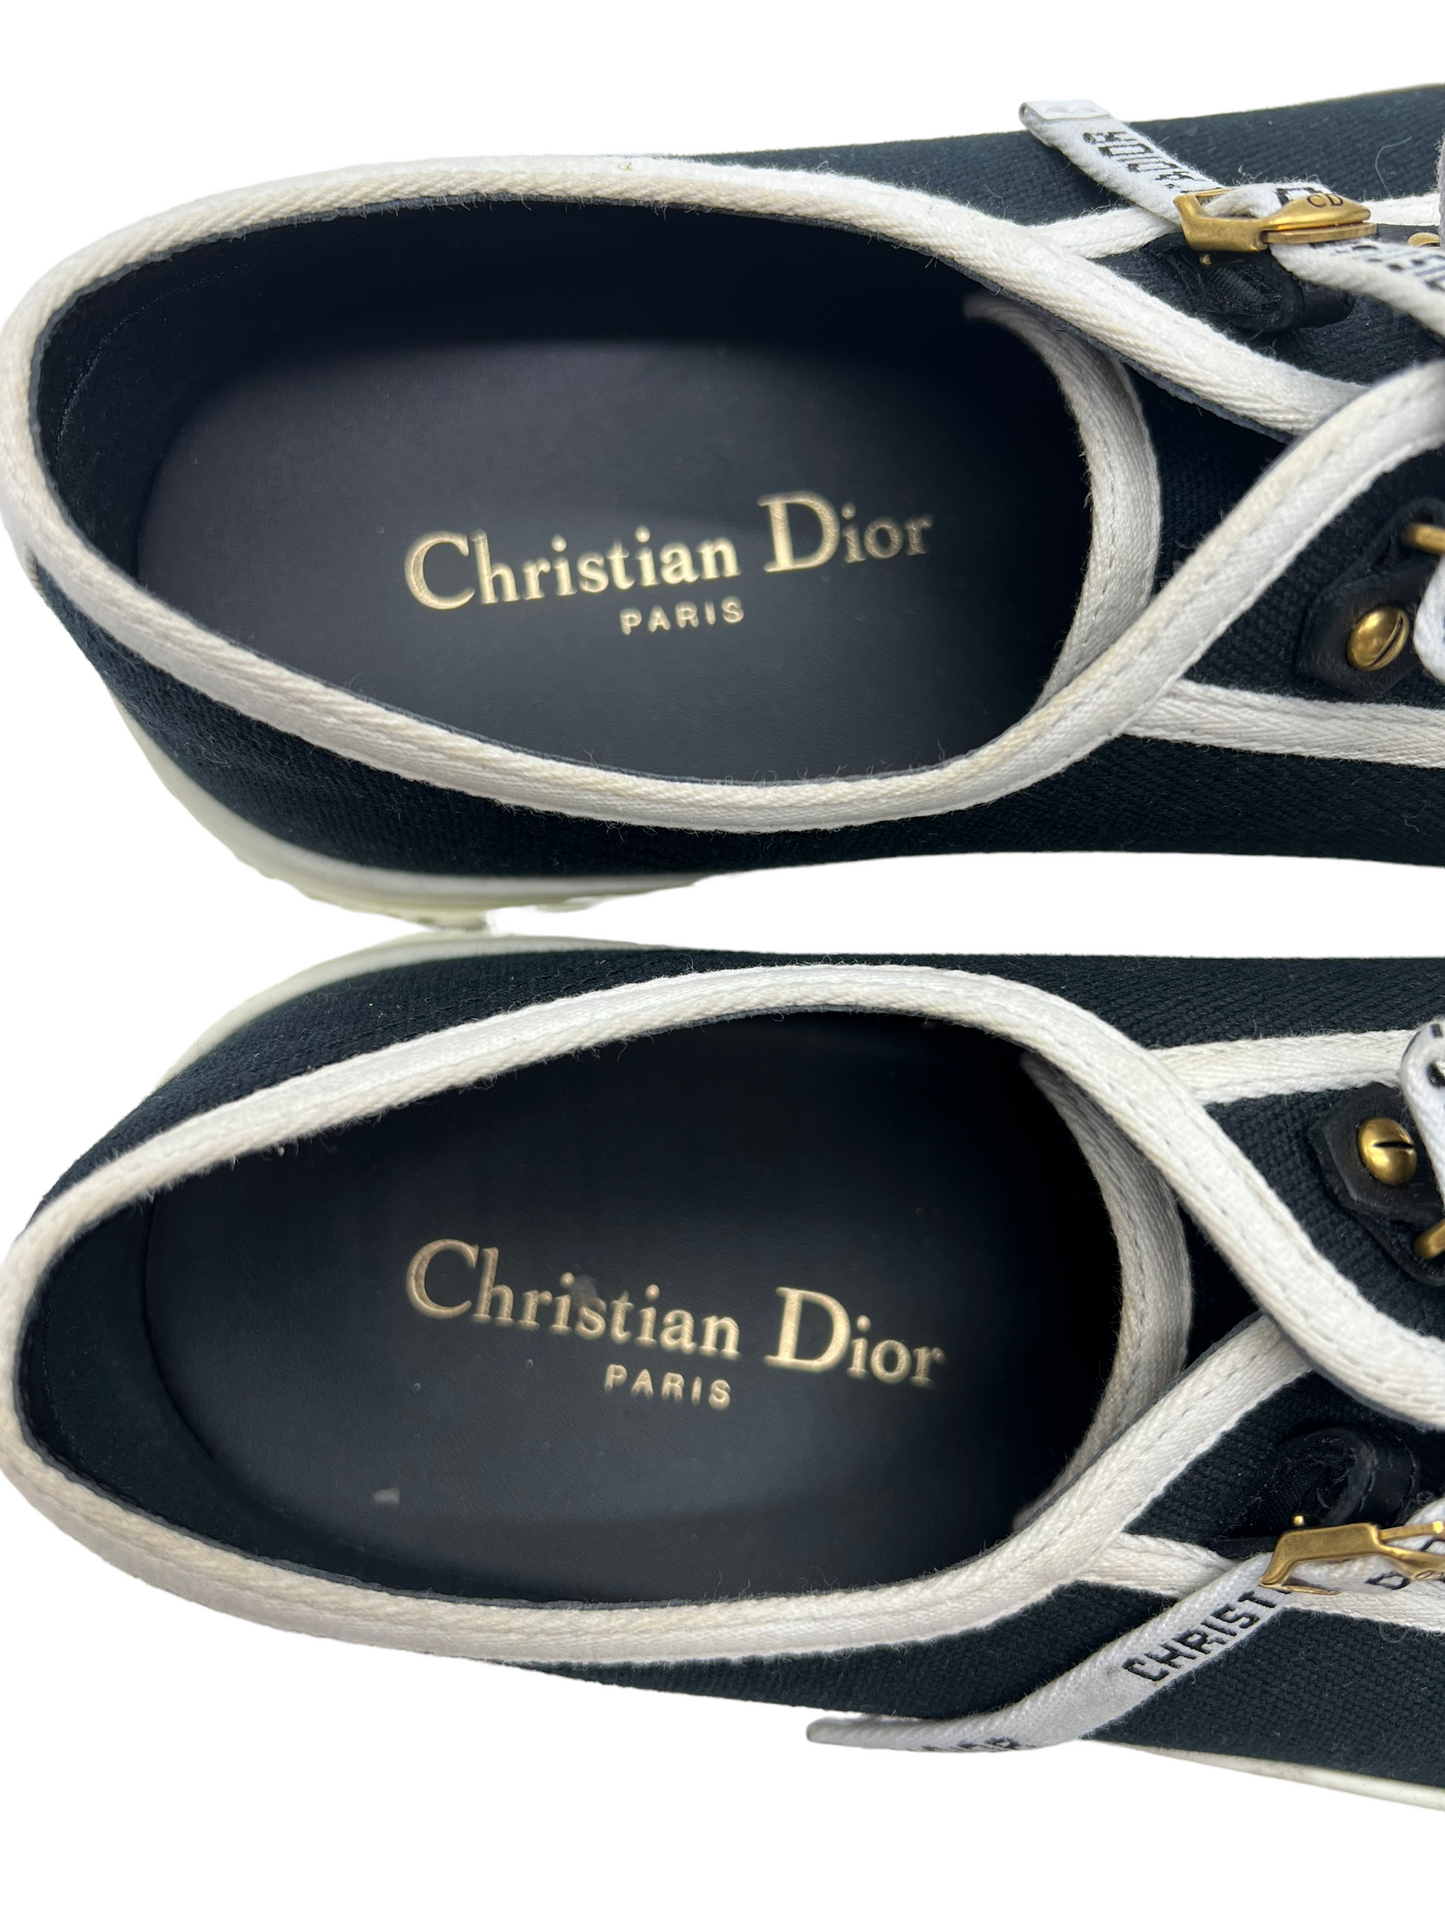 Christian Dior Black Walk 'n' Dior Men's Size 42 Low Top Sneakers